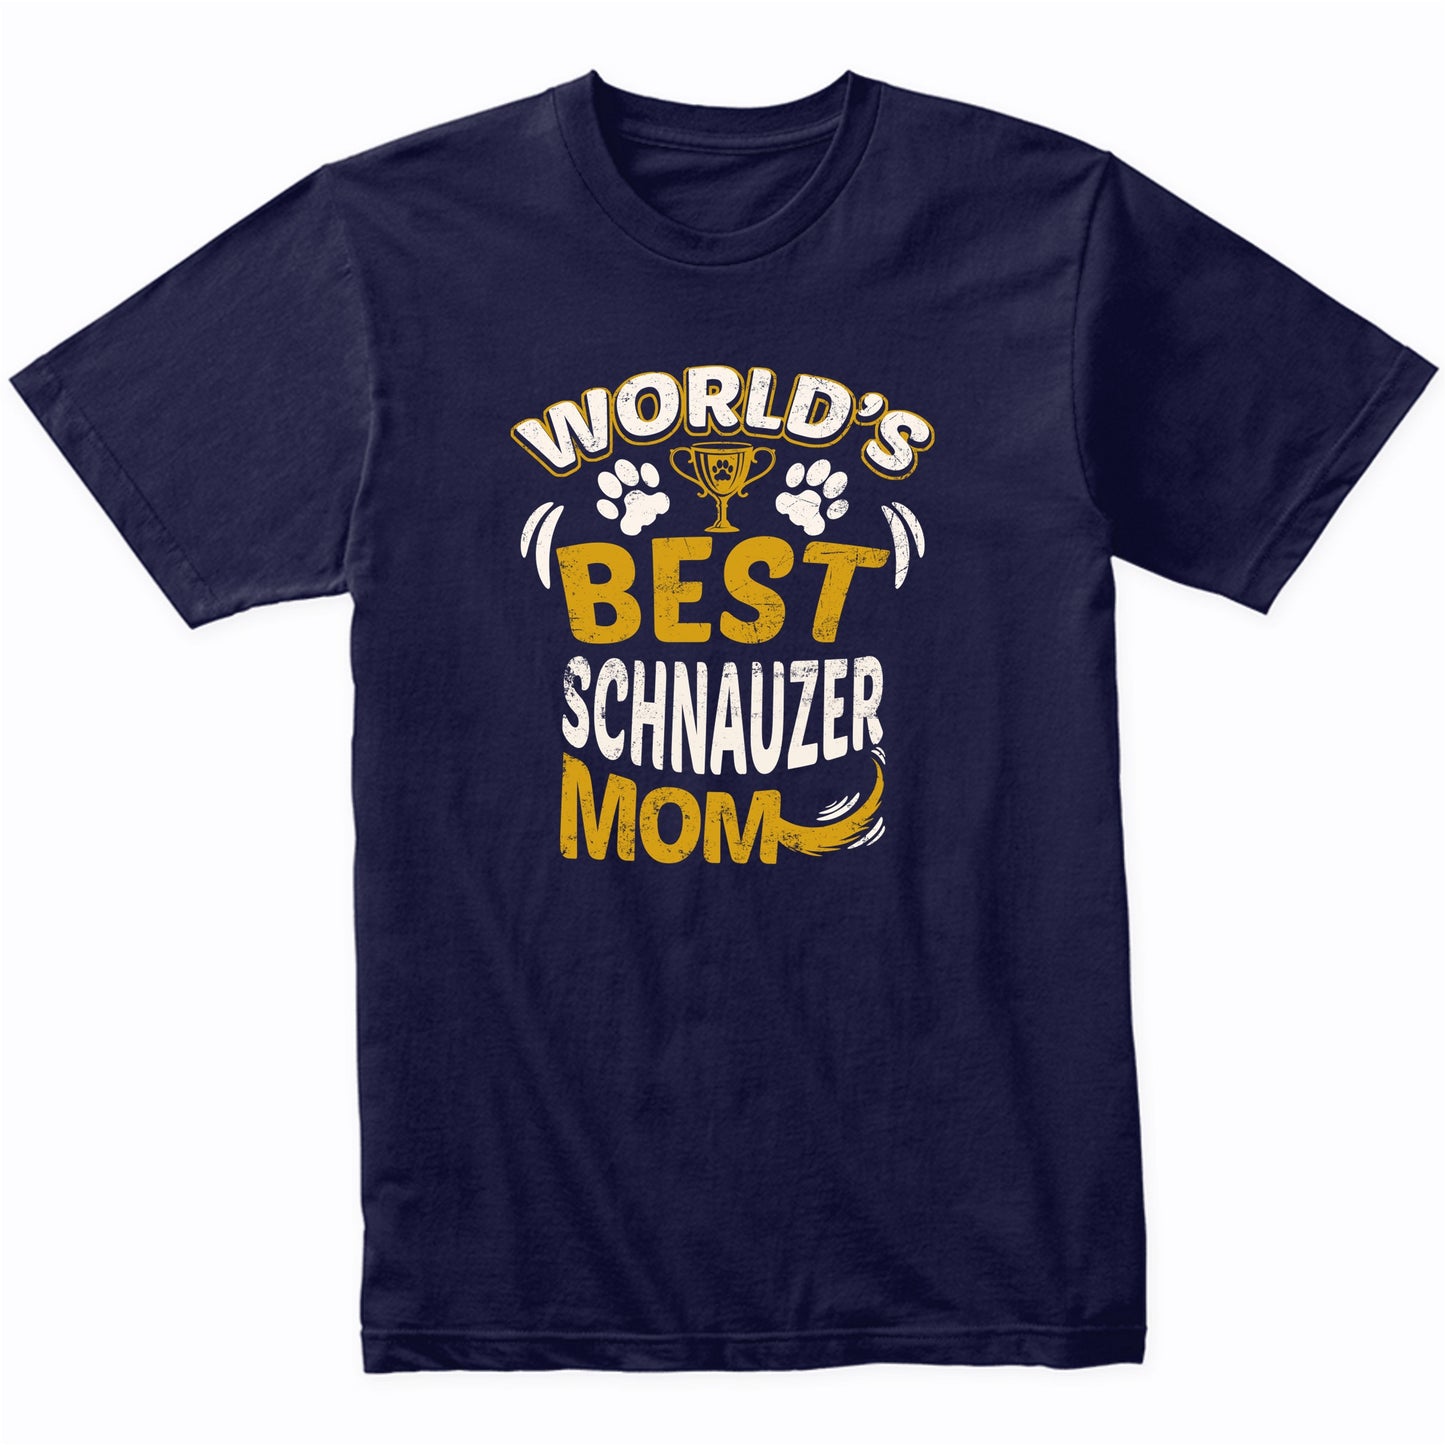 World's Best Schnauzer Mom Graphic T-Shirt